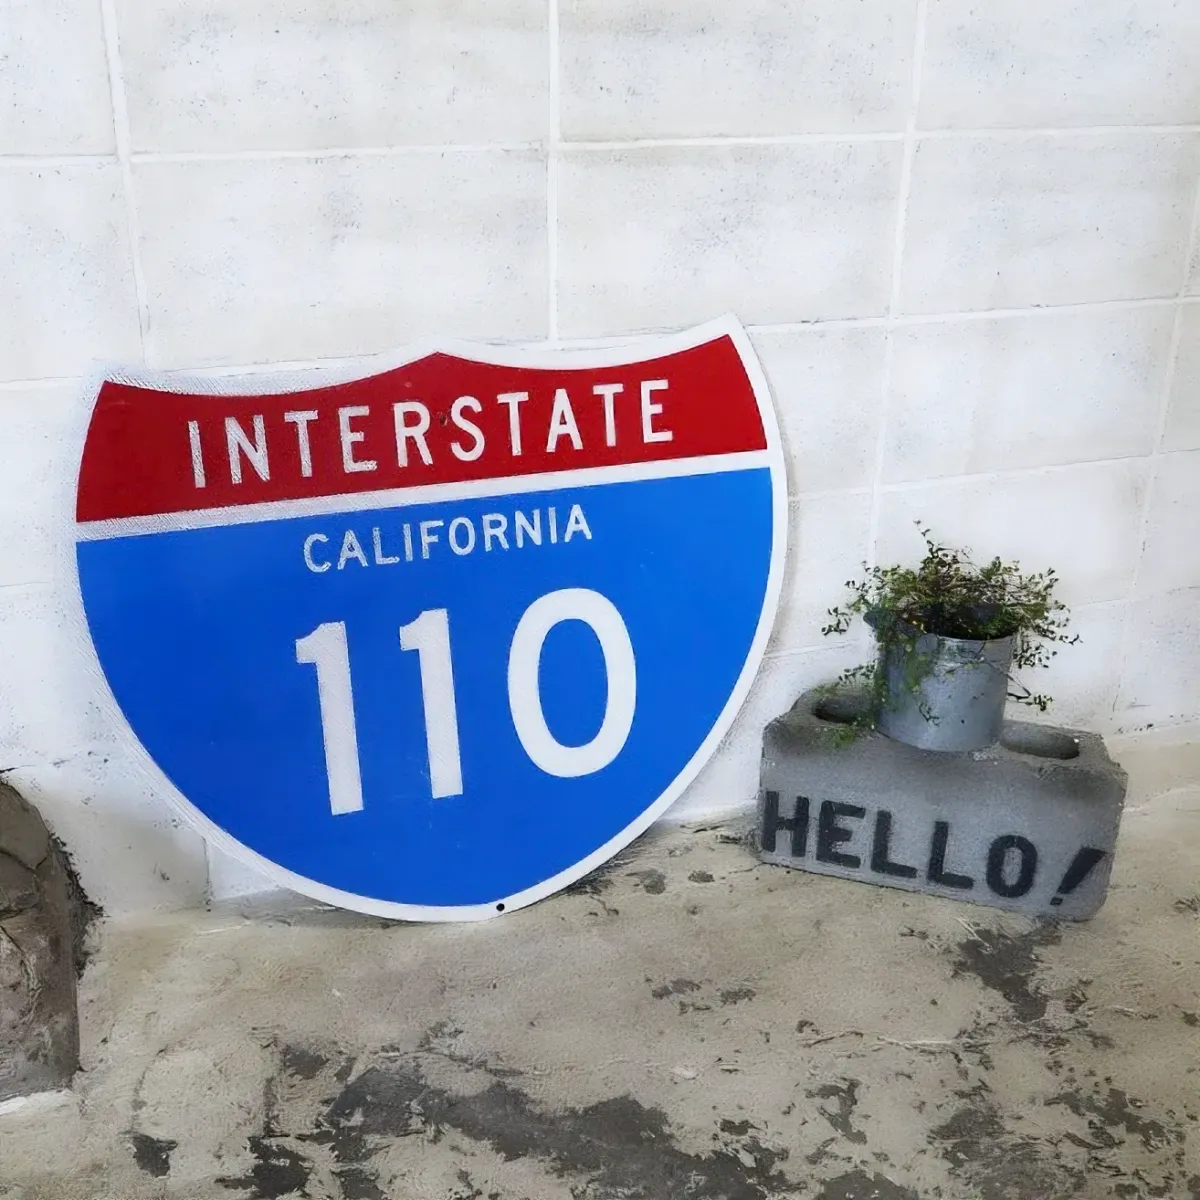 INTERSTATE CALIFORNIA 110 ロードサイン